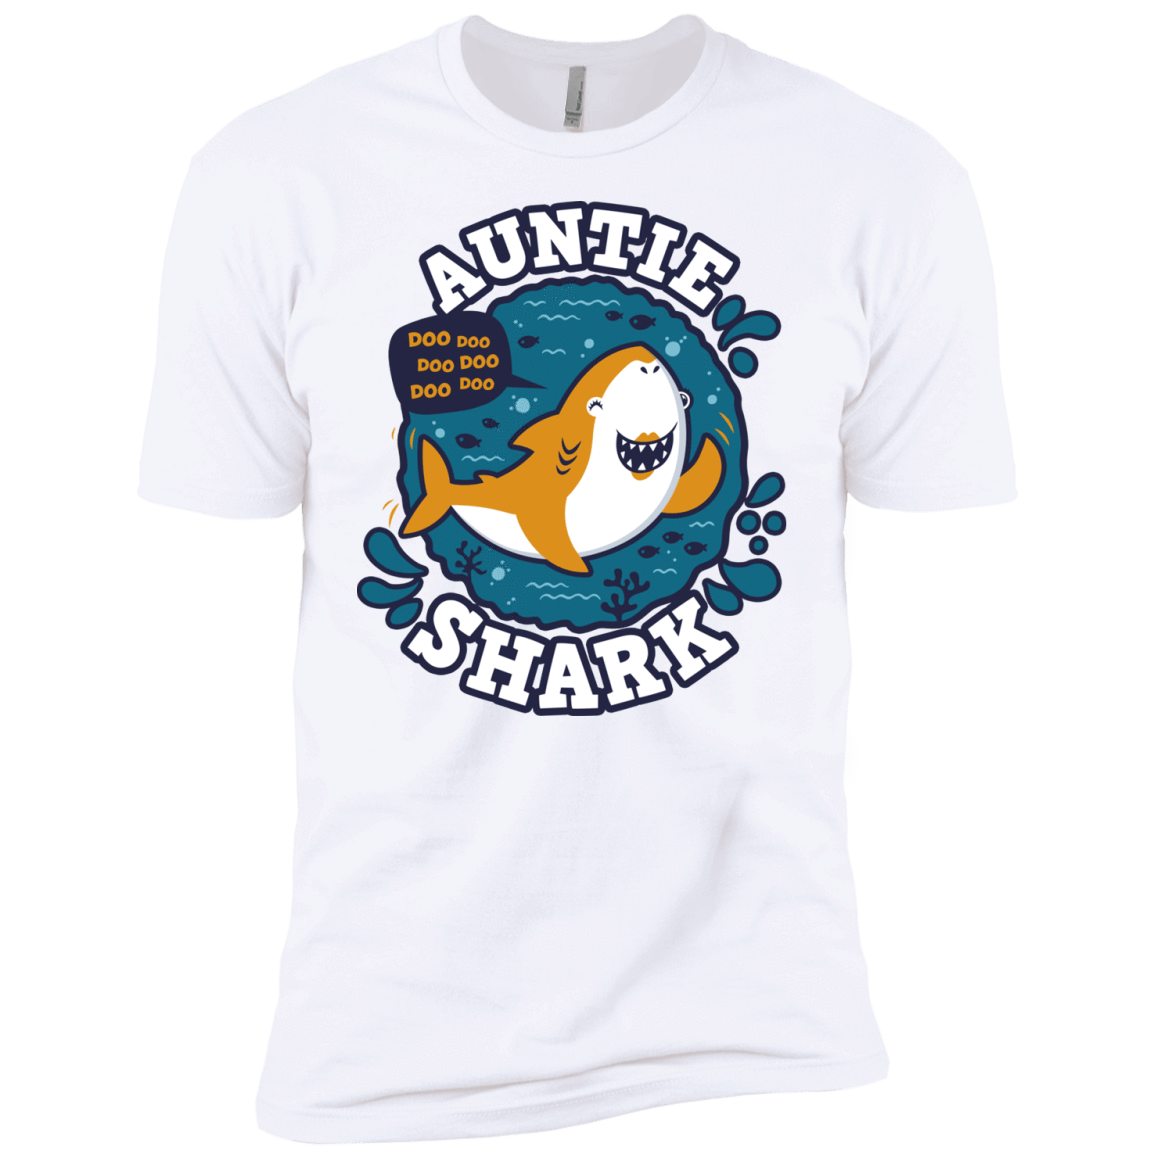 T-Shirts White / YXS Shark Family Trazo - Auntie Boys Premium T-Shirt